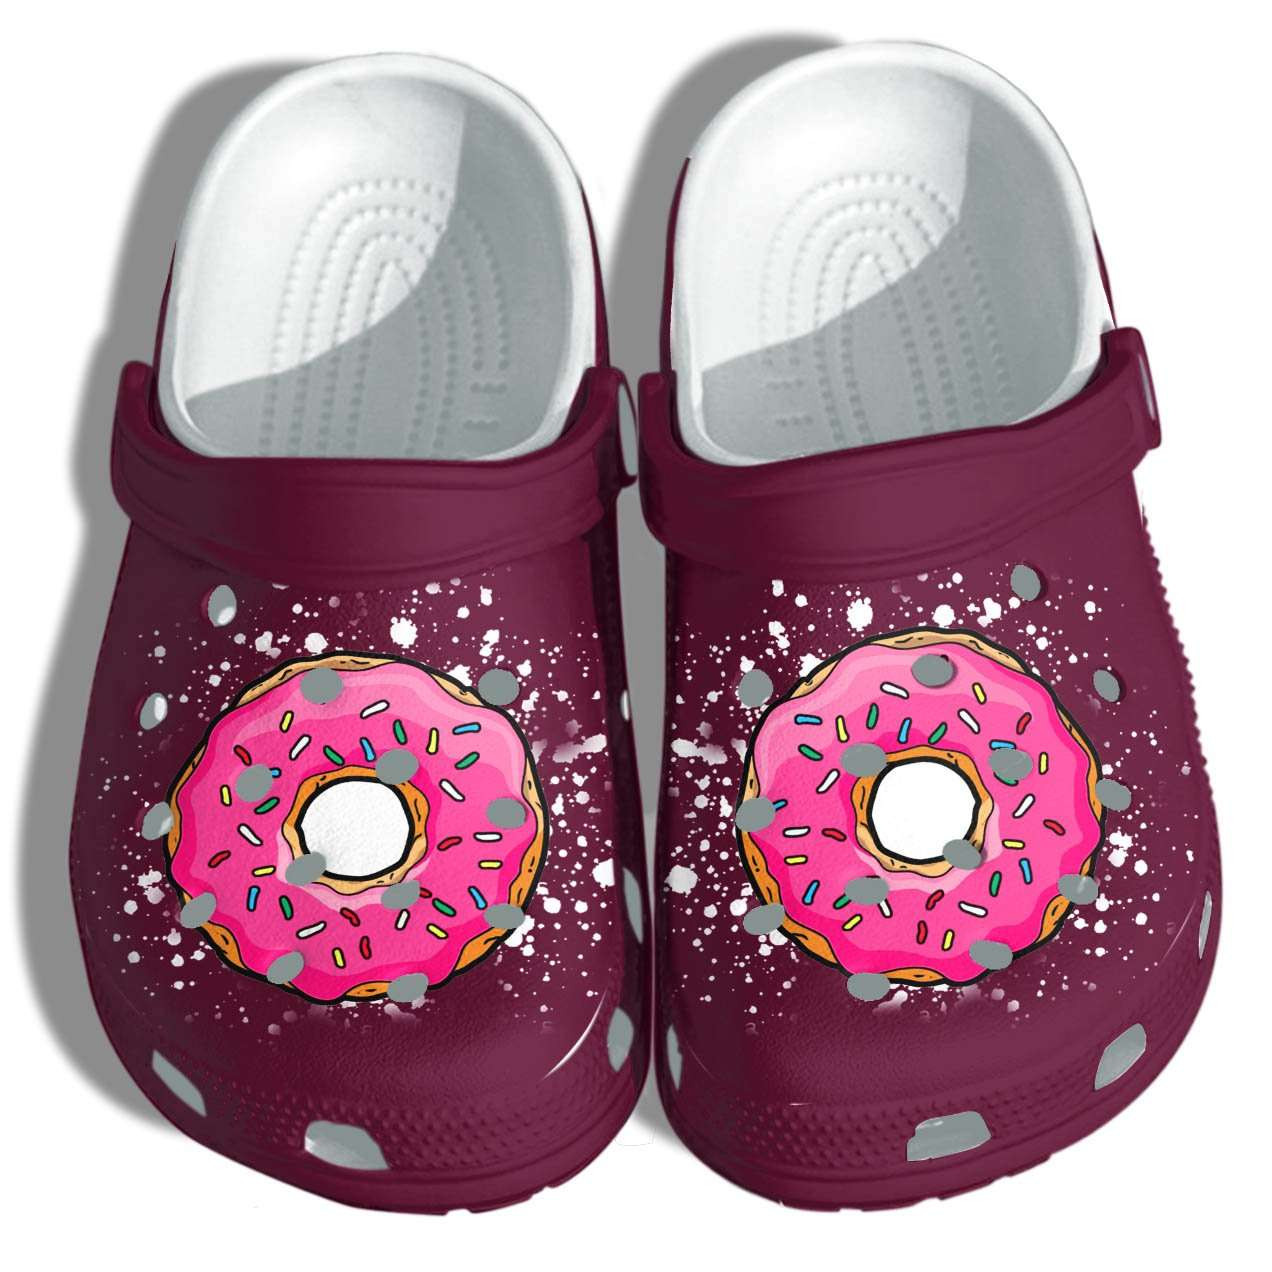 Cute Donut Cake Crocs Crocband Clog Shoes